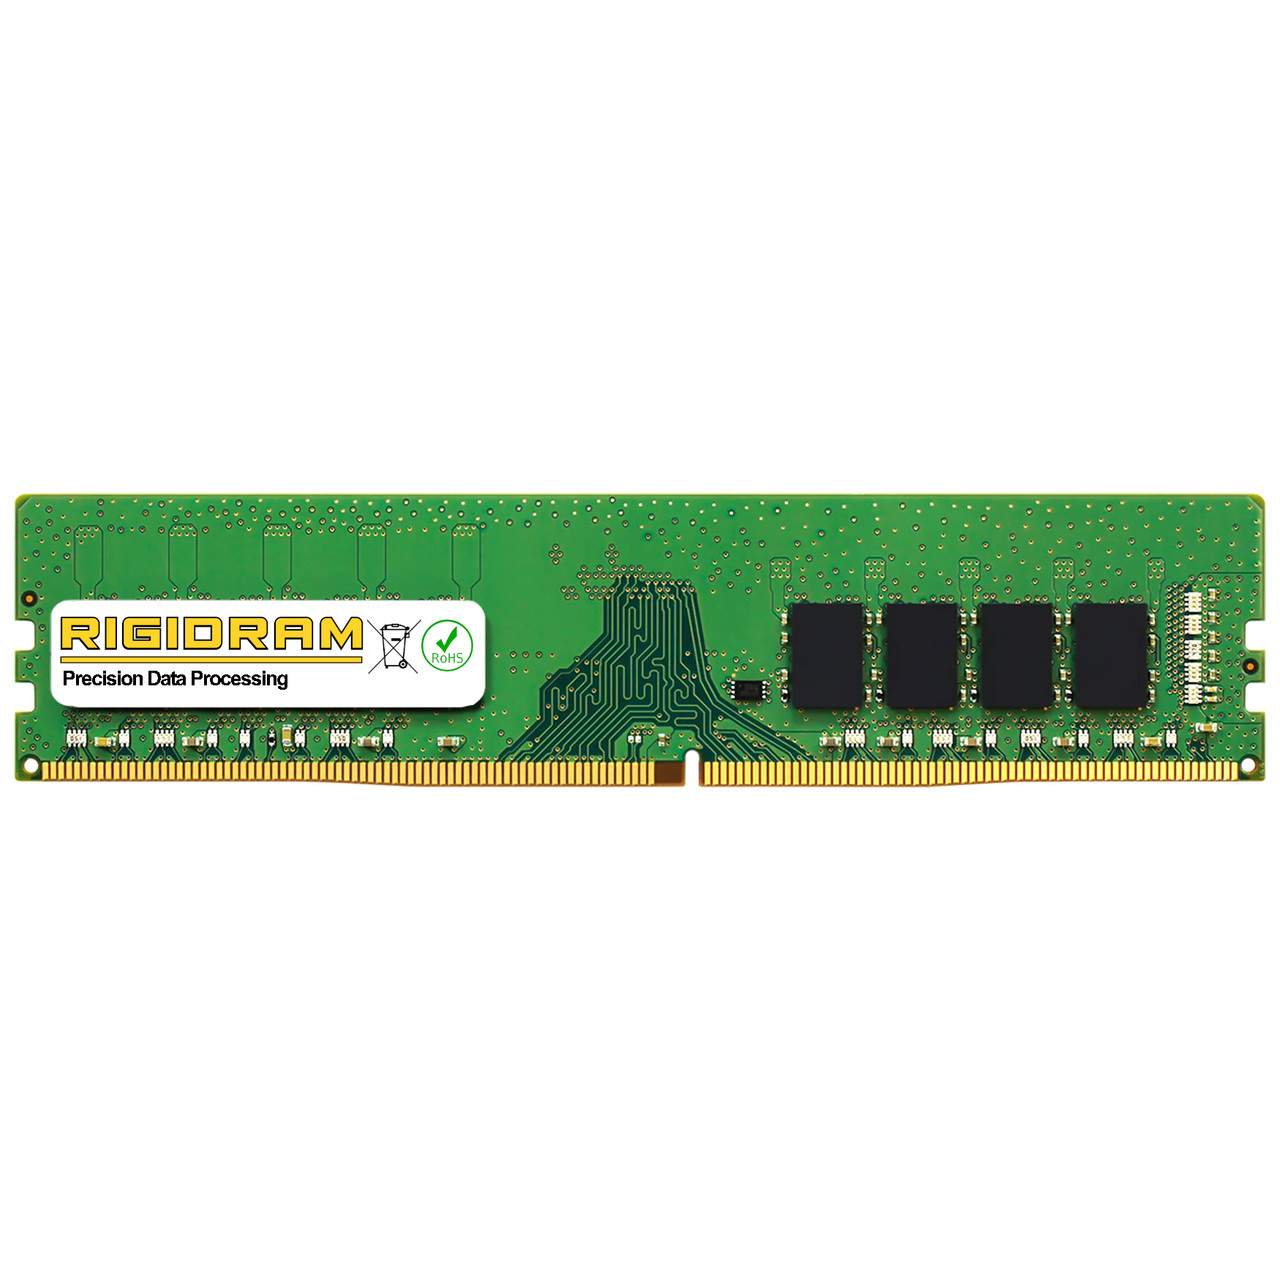 16GB RAM Dell Inspiron 3671 with 9th Generation Intel Core i5 & i7 Processors DDR4 Memory by RigidRAM Upgrades